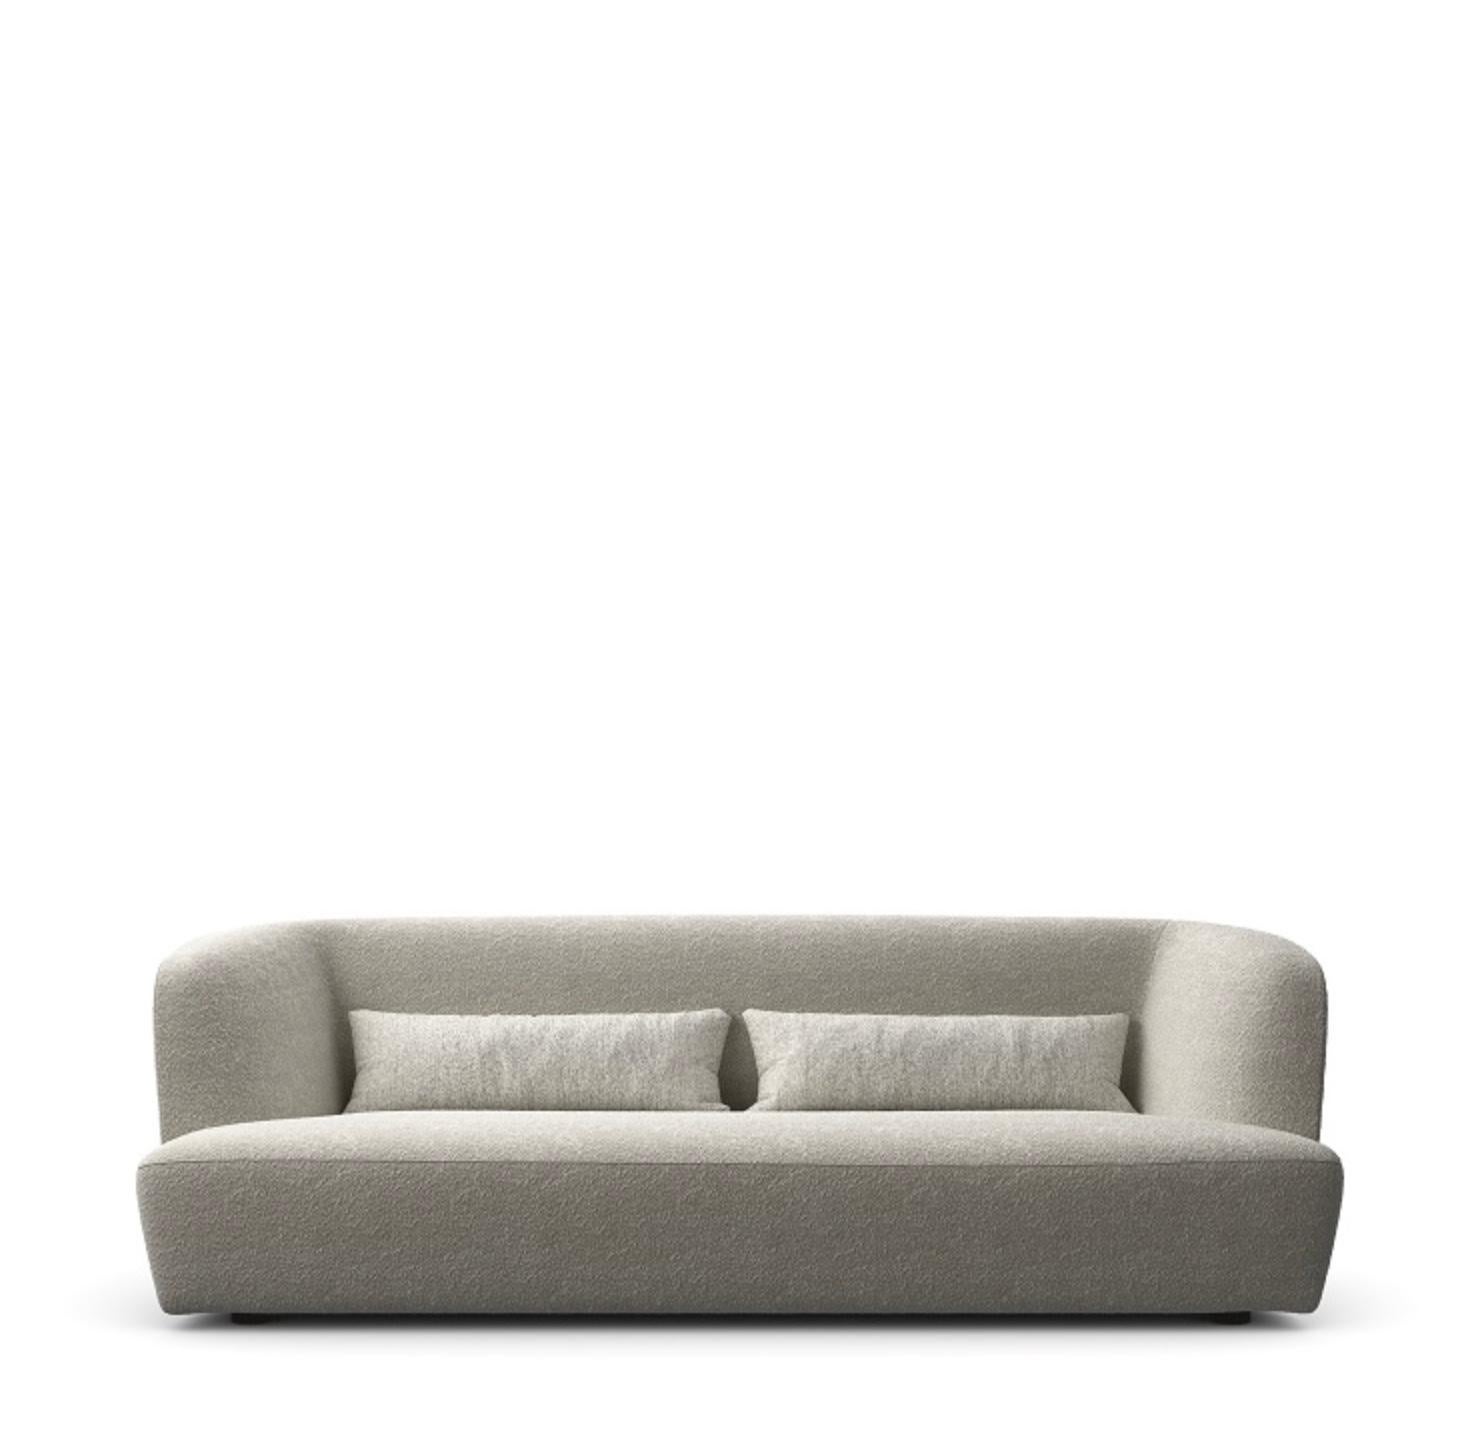 Lievore + Altherr Désile Park 'Davos' Sofa 205 for Verzelloni Italy For Sale 1